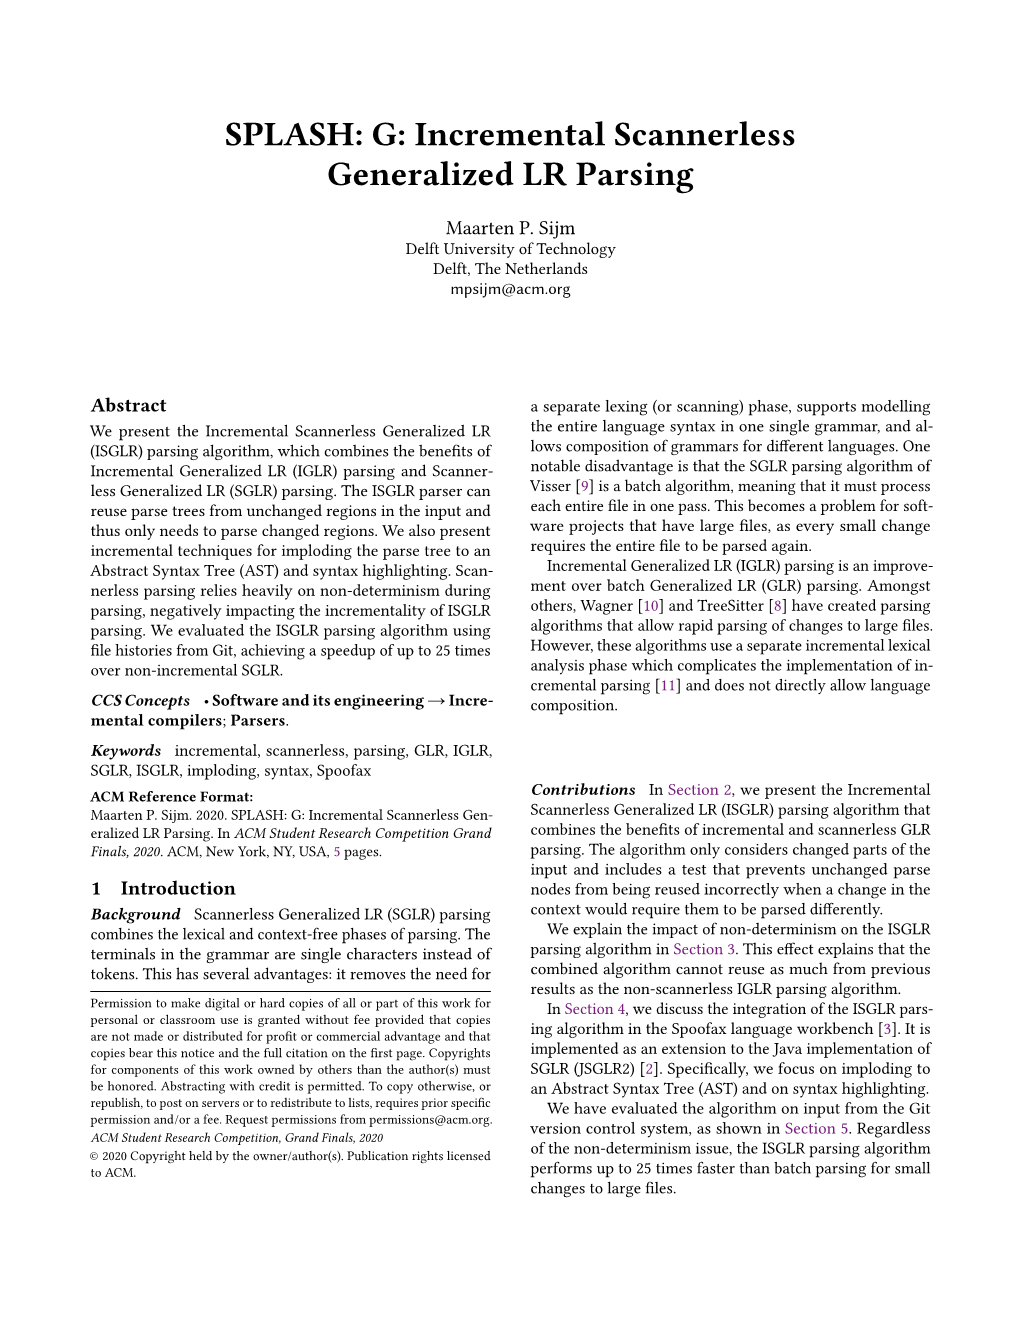 Incremental Scannerless Generalized LR Parsing